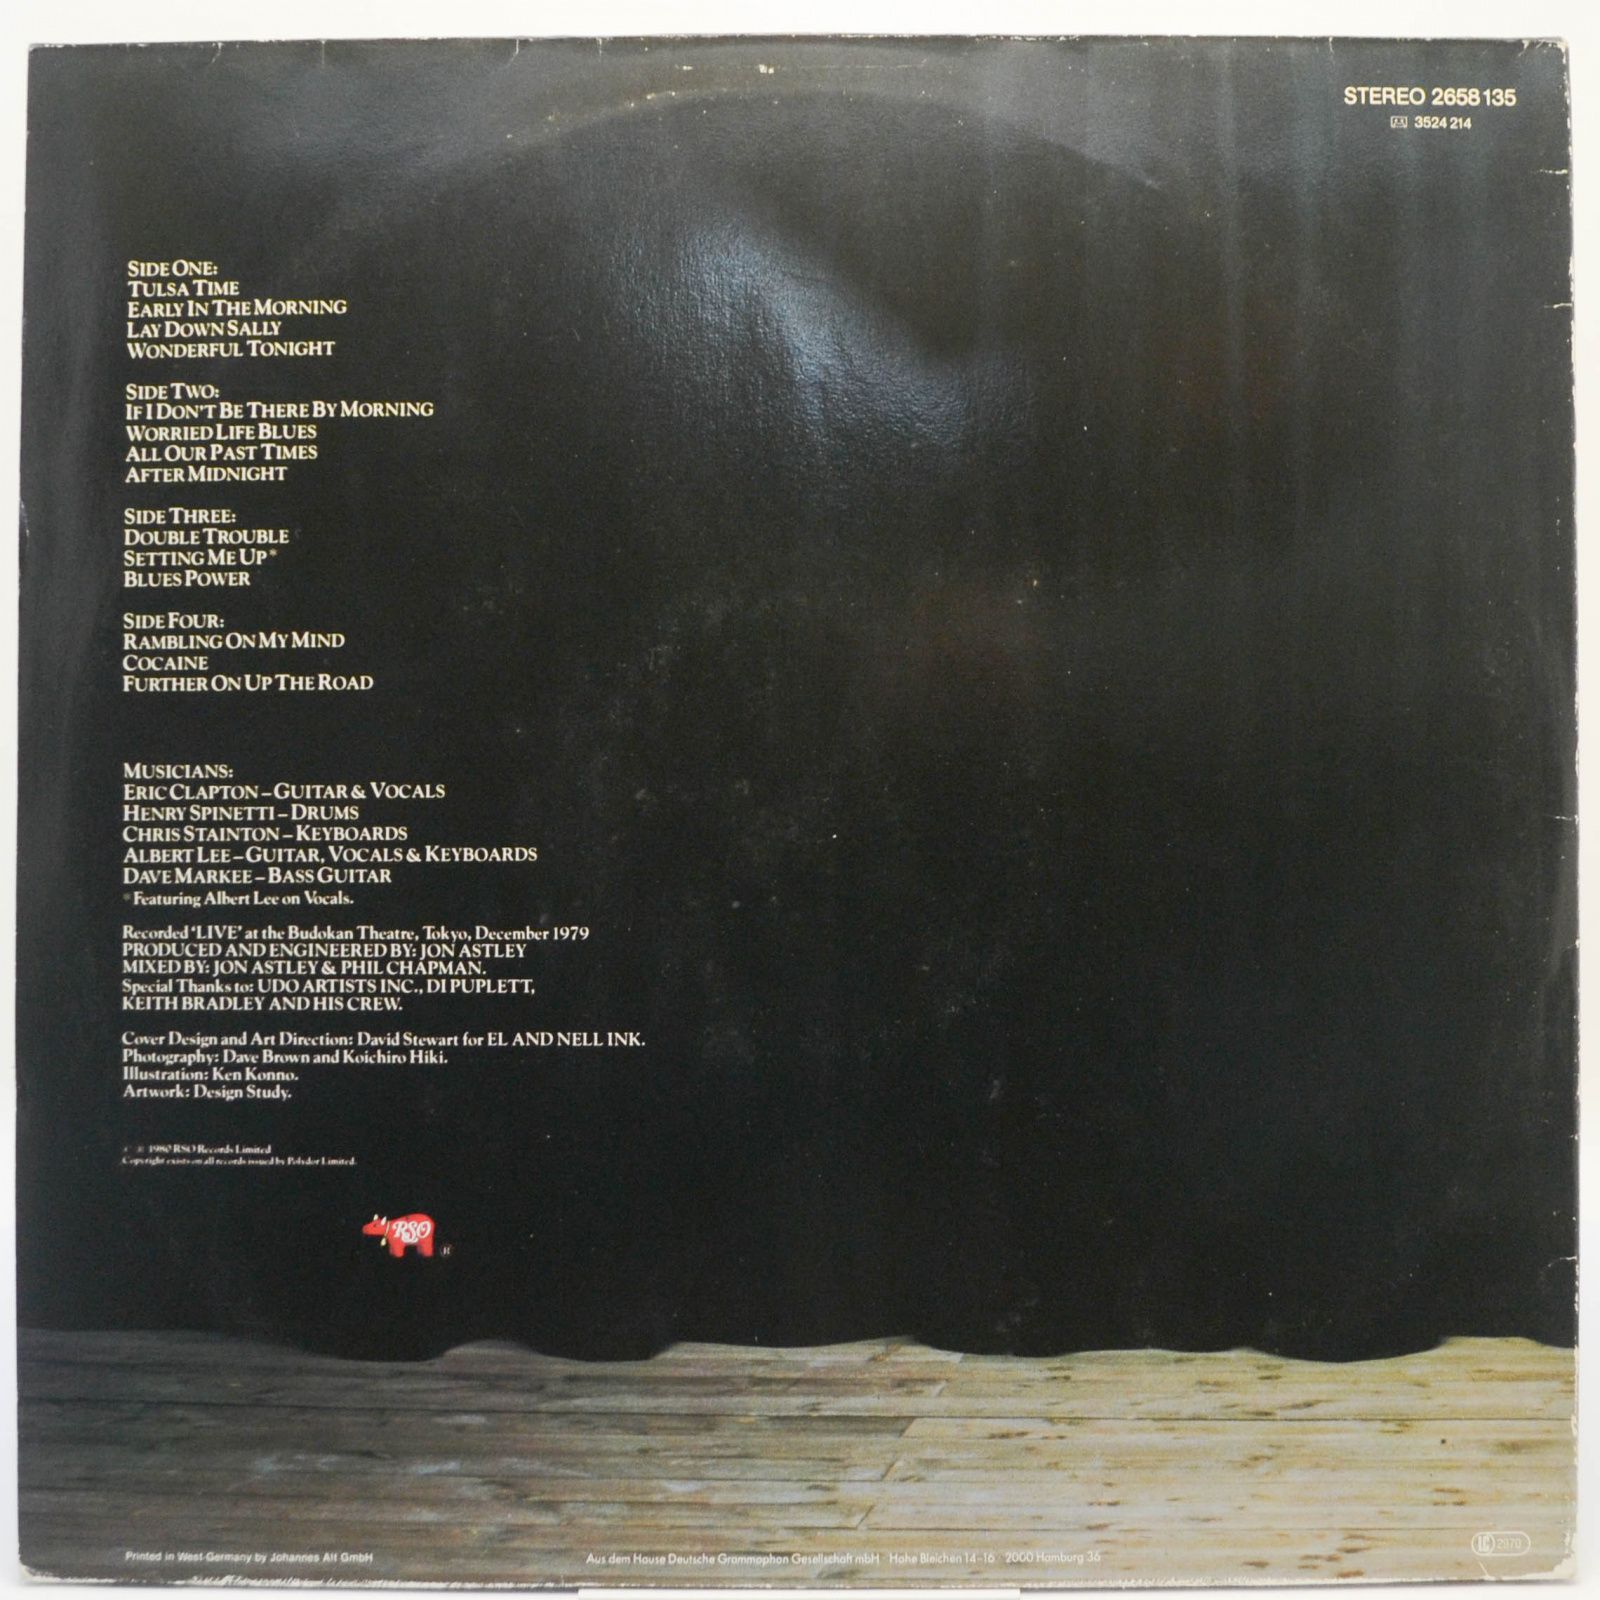 Eric Clapton — Just One Night (2LP), 1980